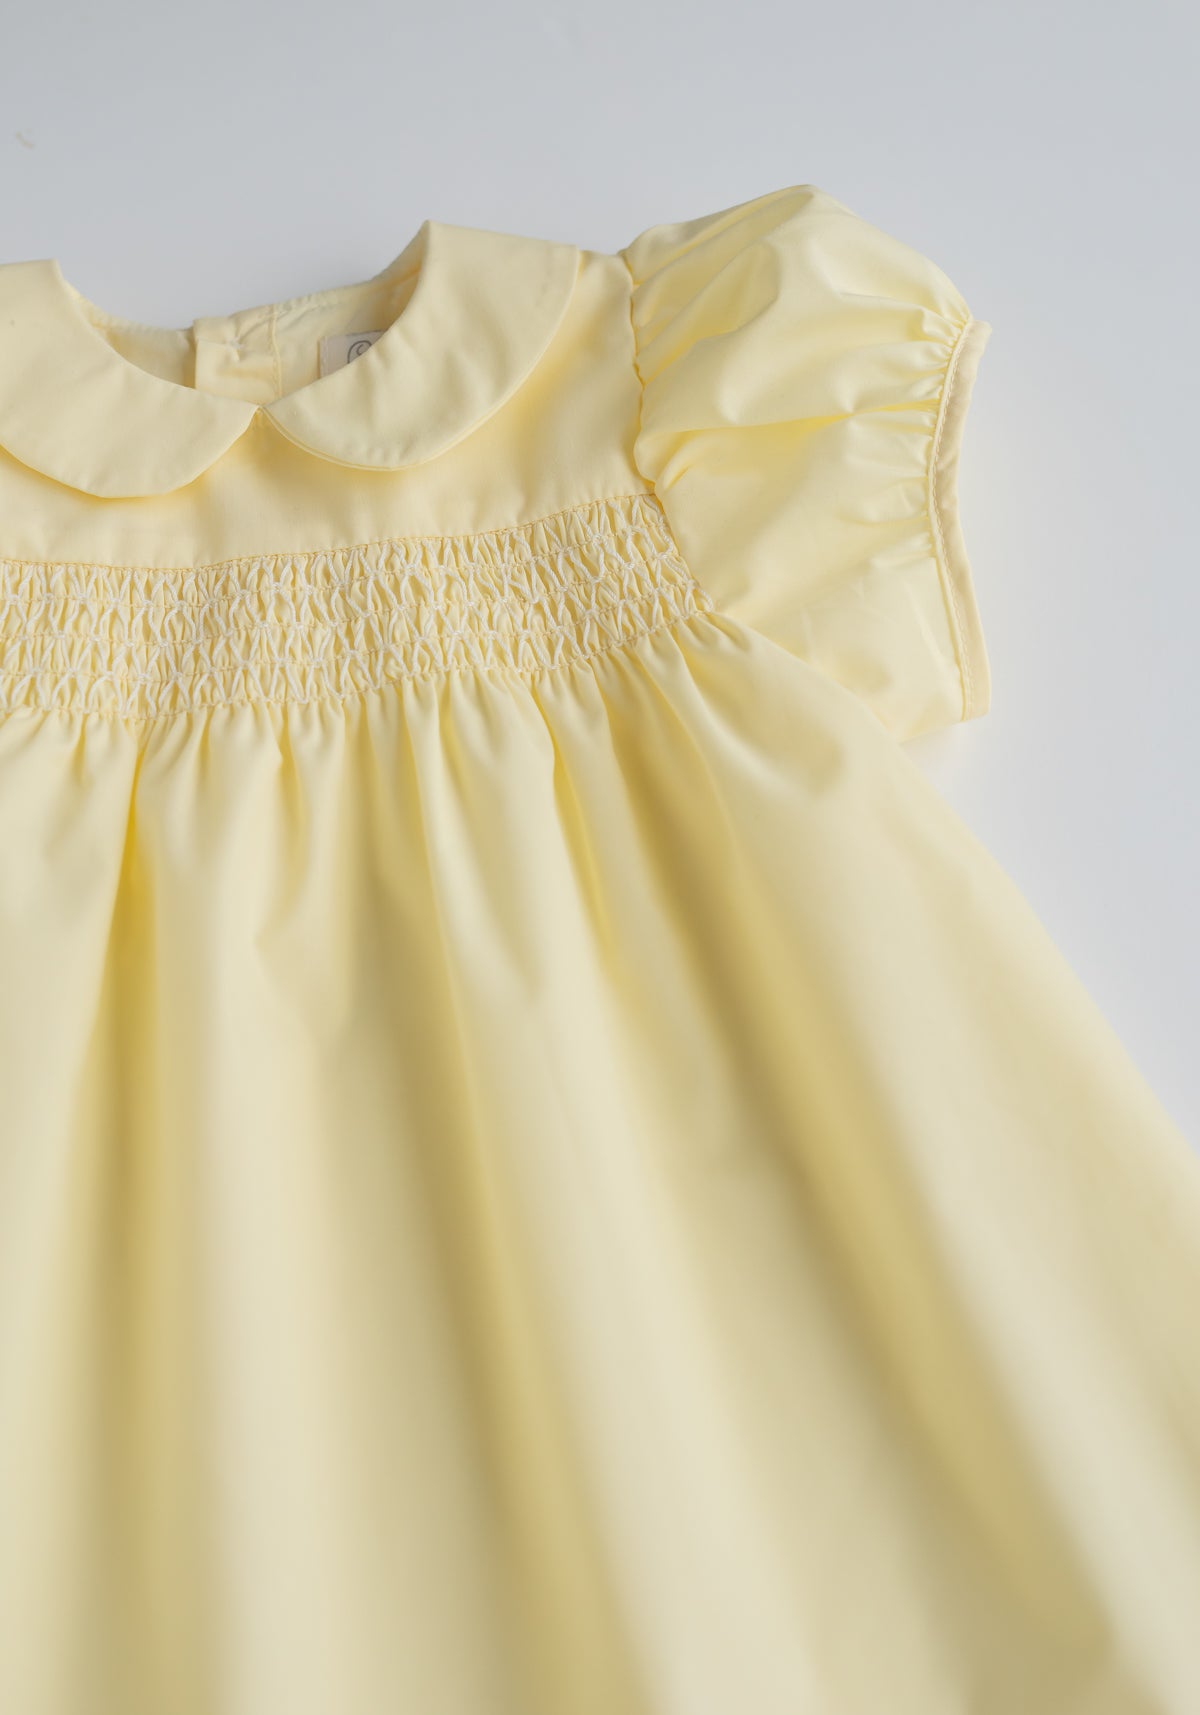 Vintage Buttercup Smocked Dress